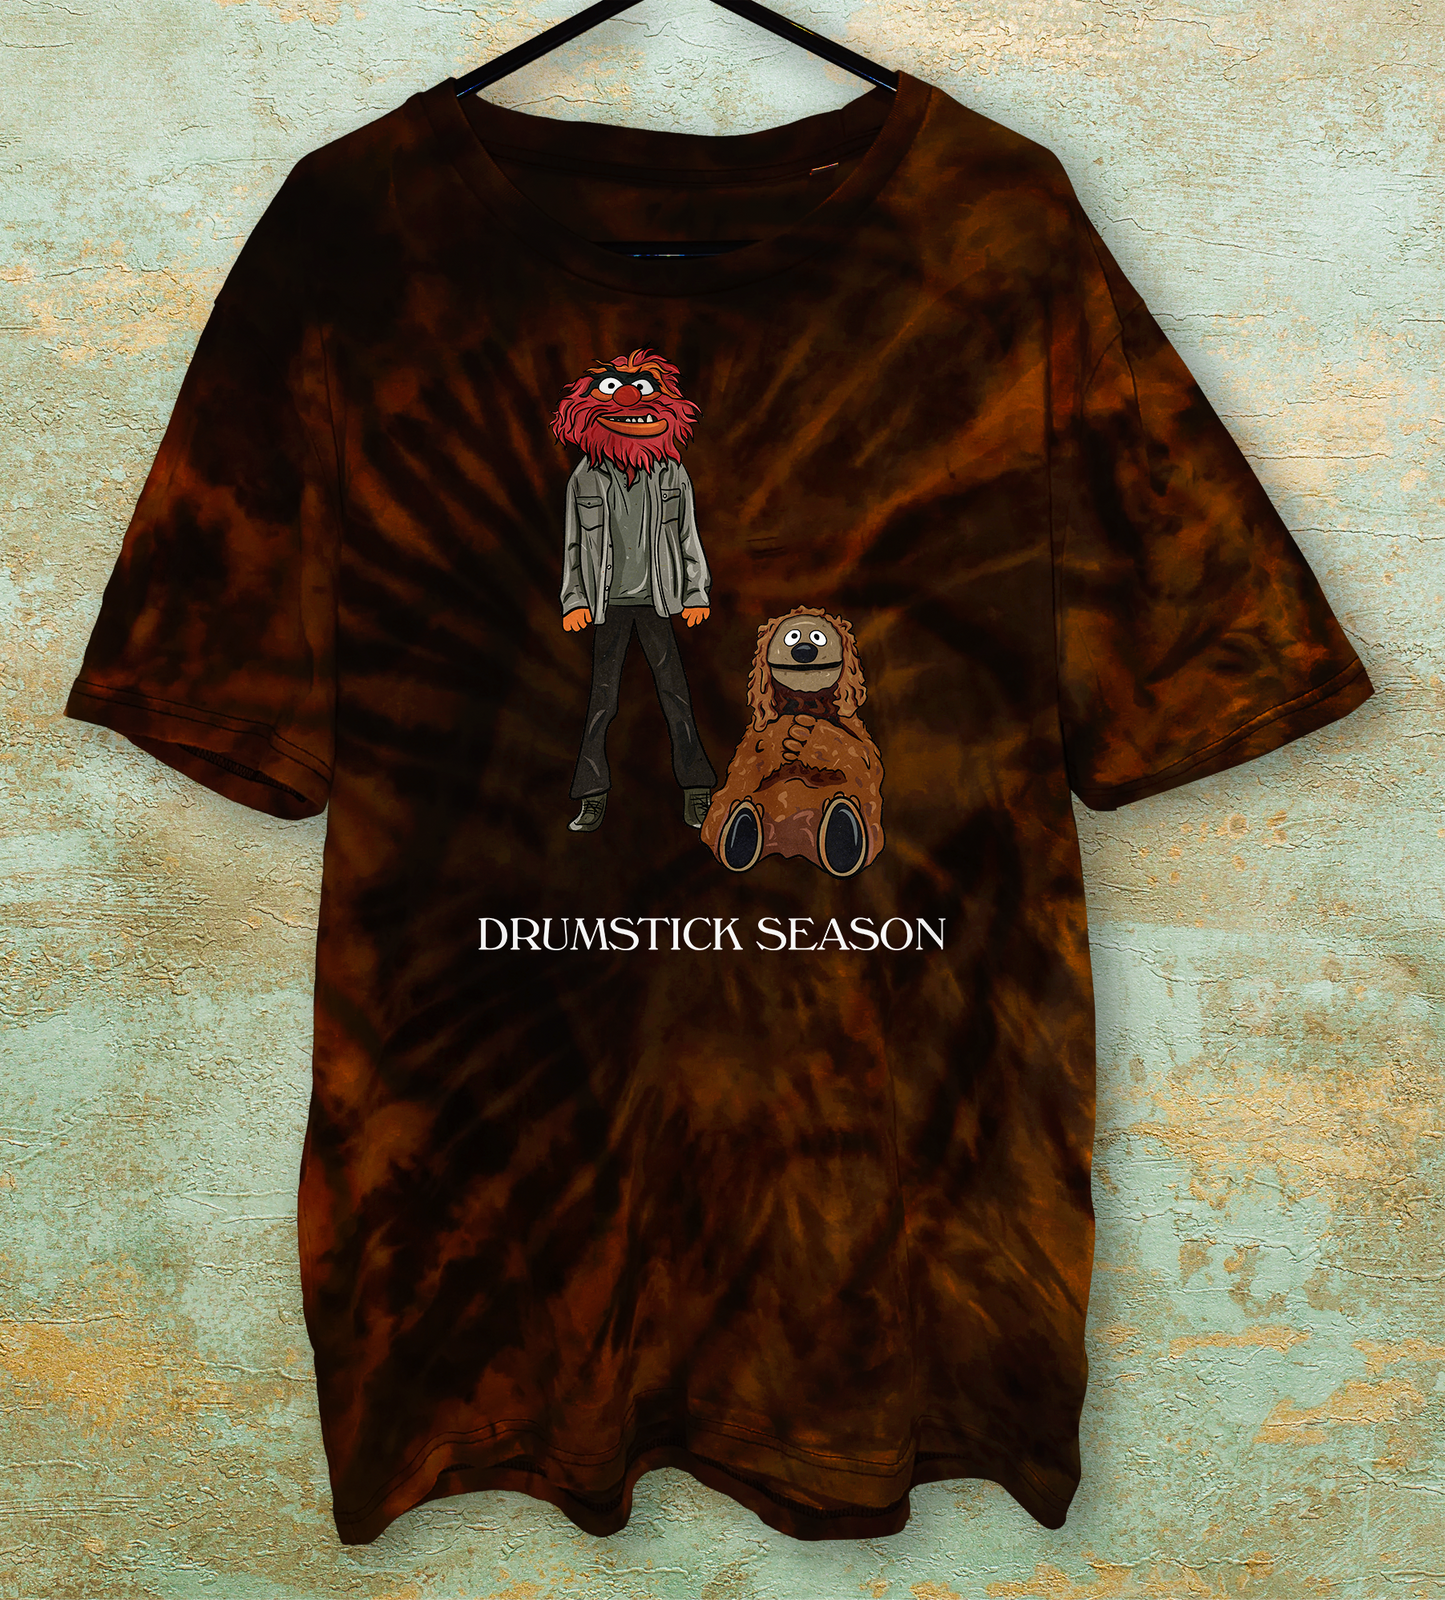 Noah Kahan 'Stick Season' Muppet Parody Shirt